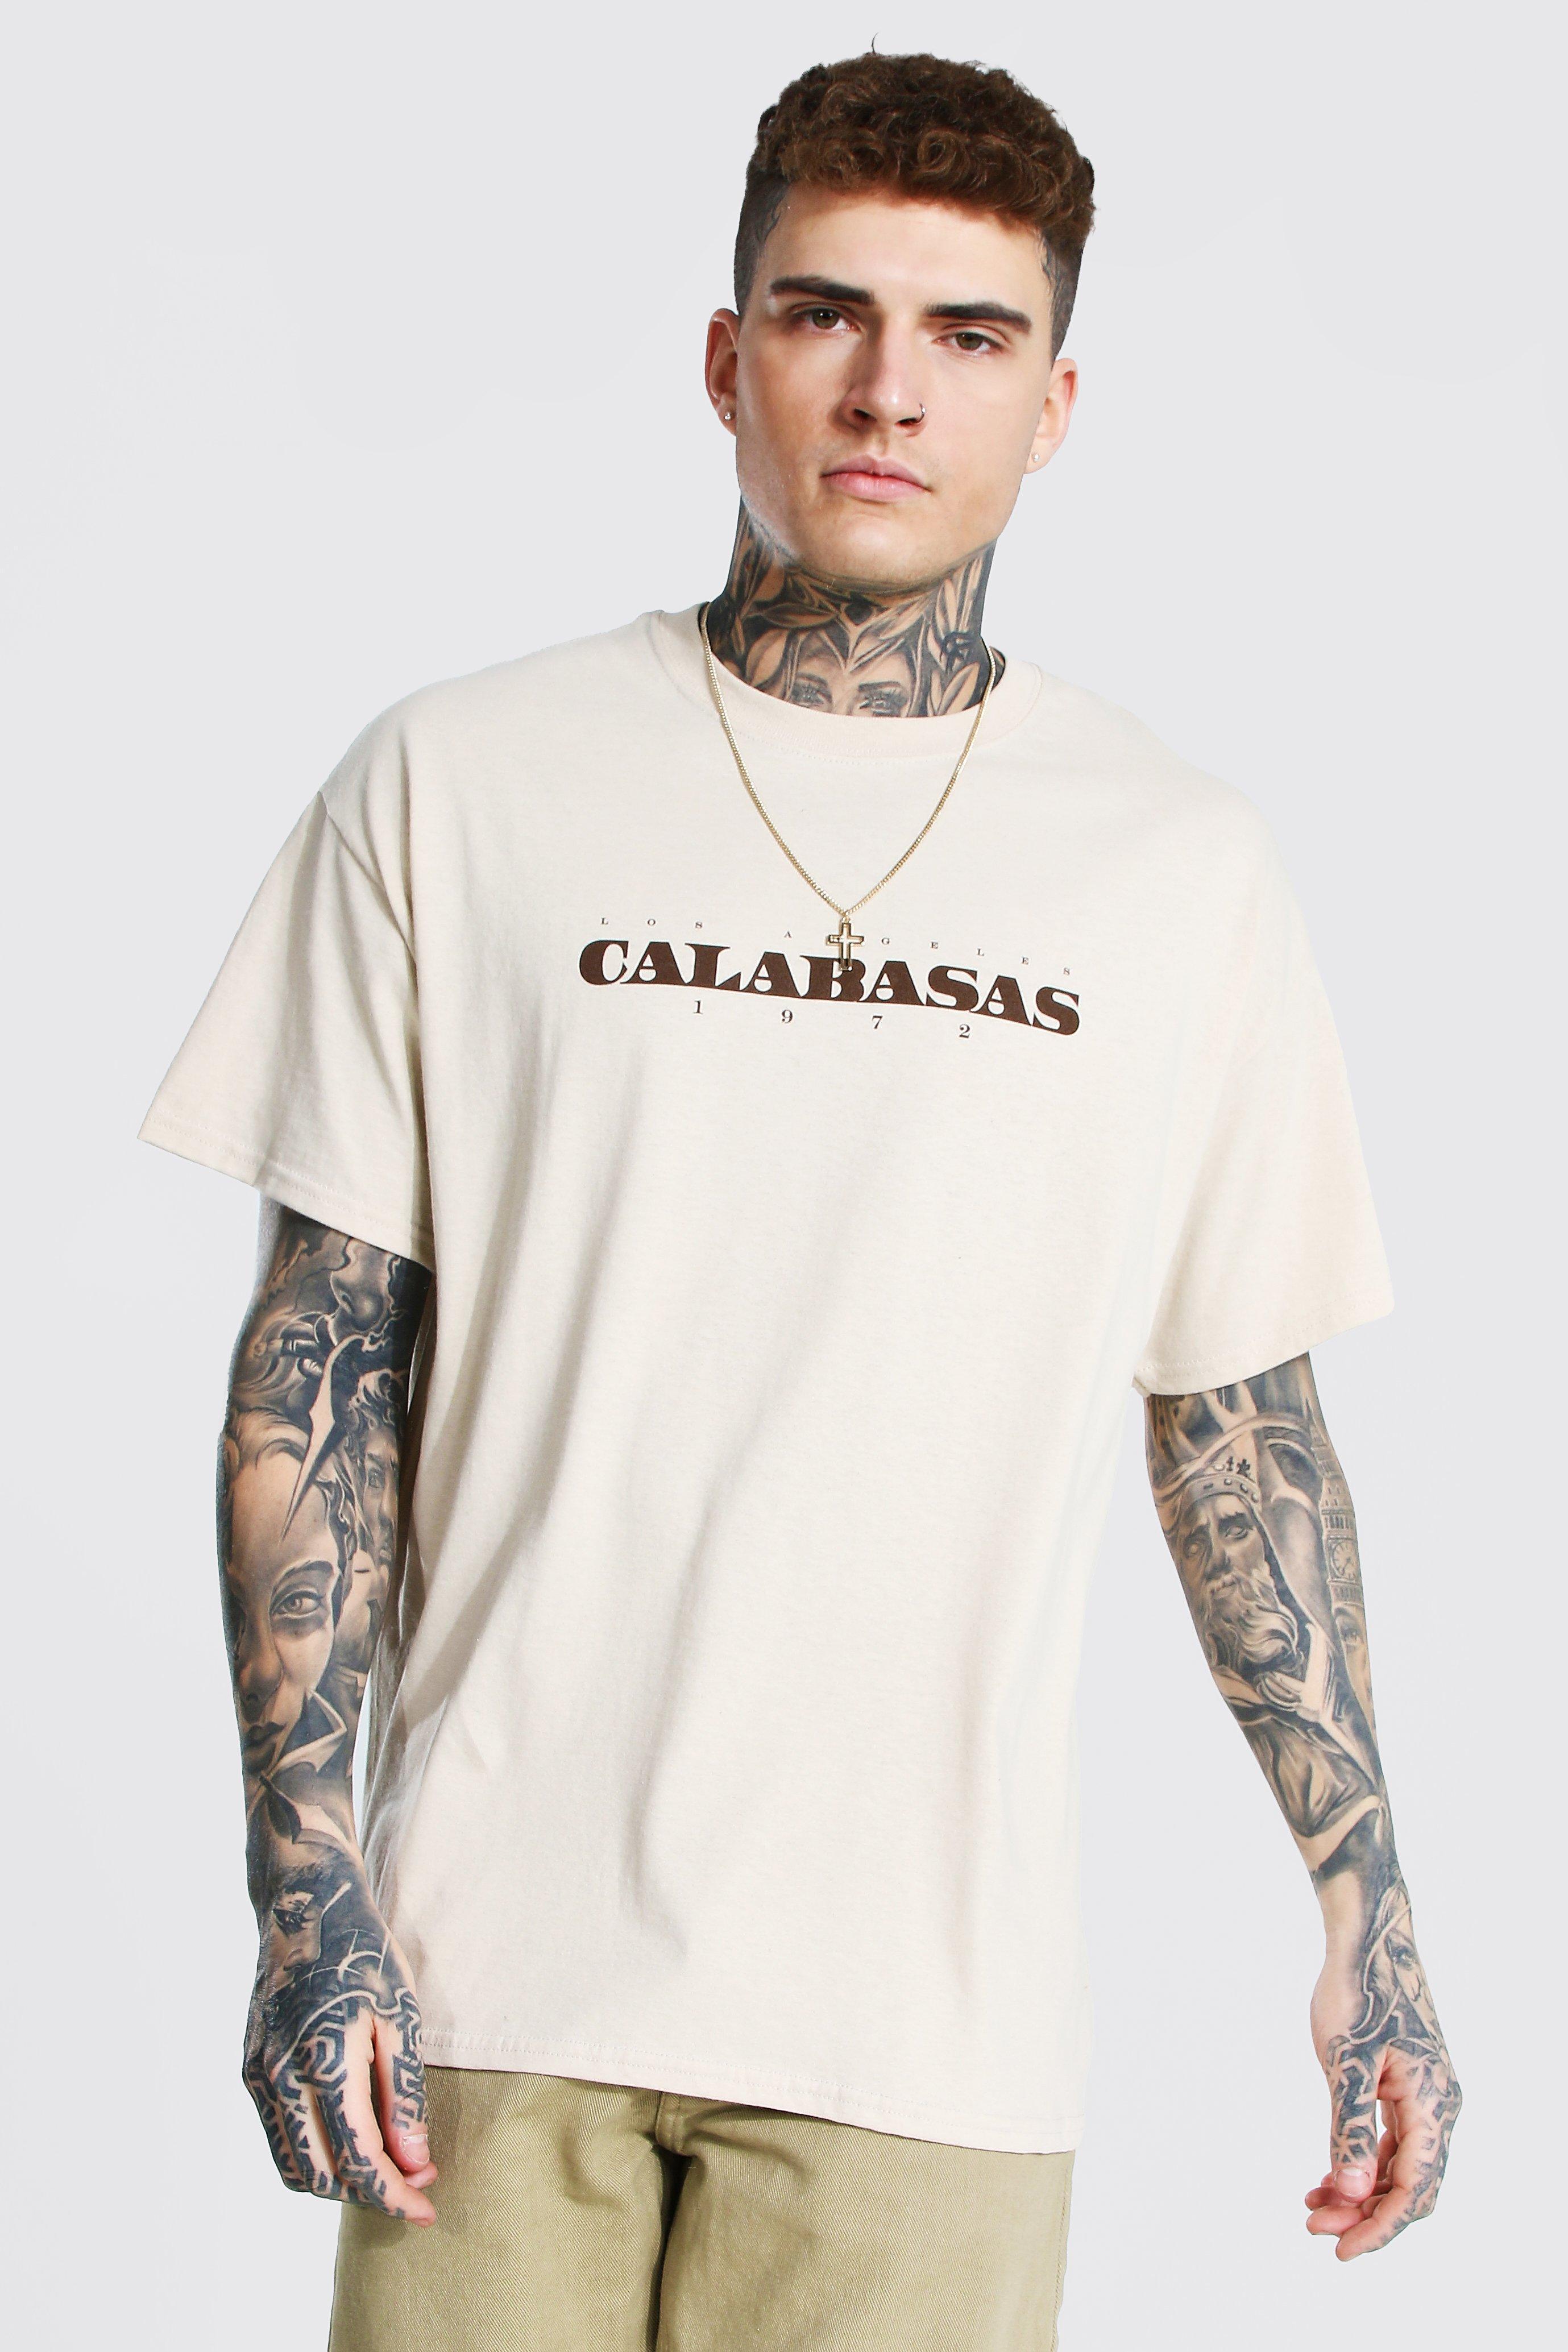 BoohooMAN Denim Oversized Calabasas Print T-shirt in Beige (Natural) for  Men - Lyst